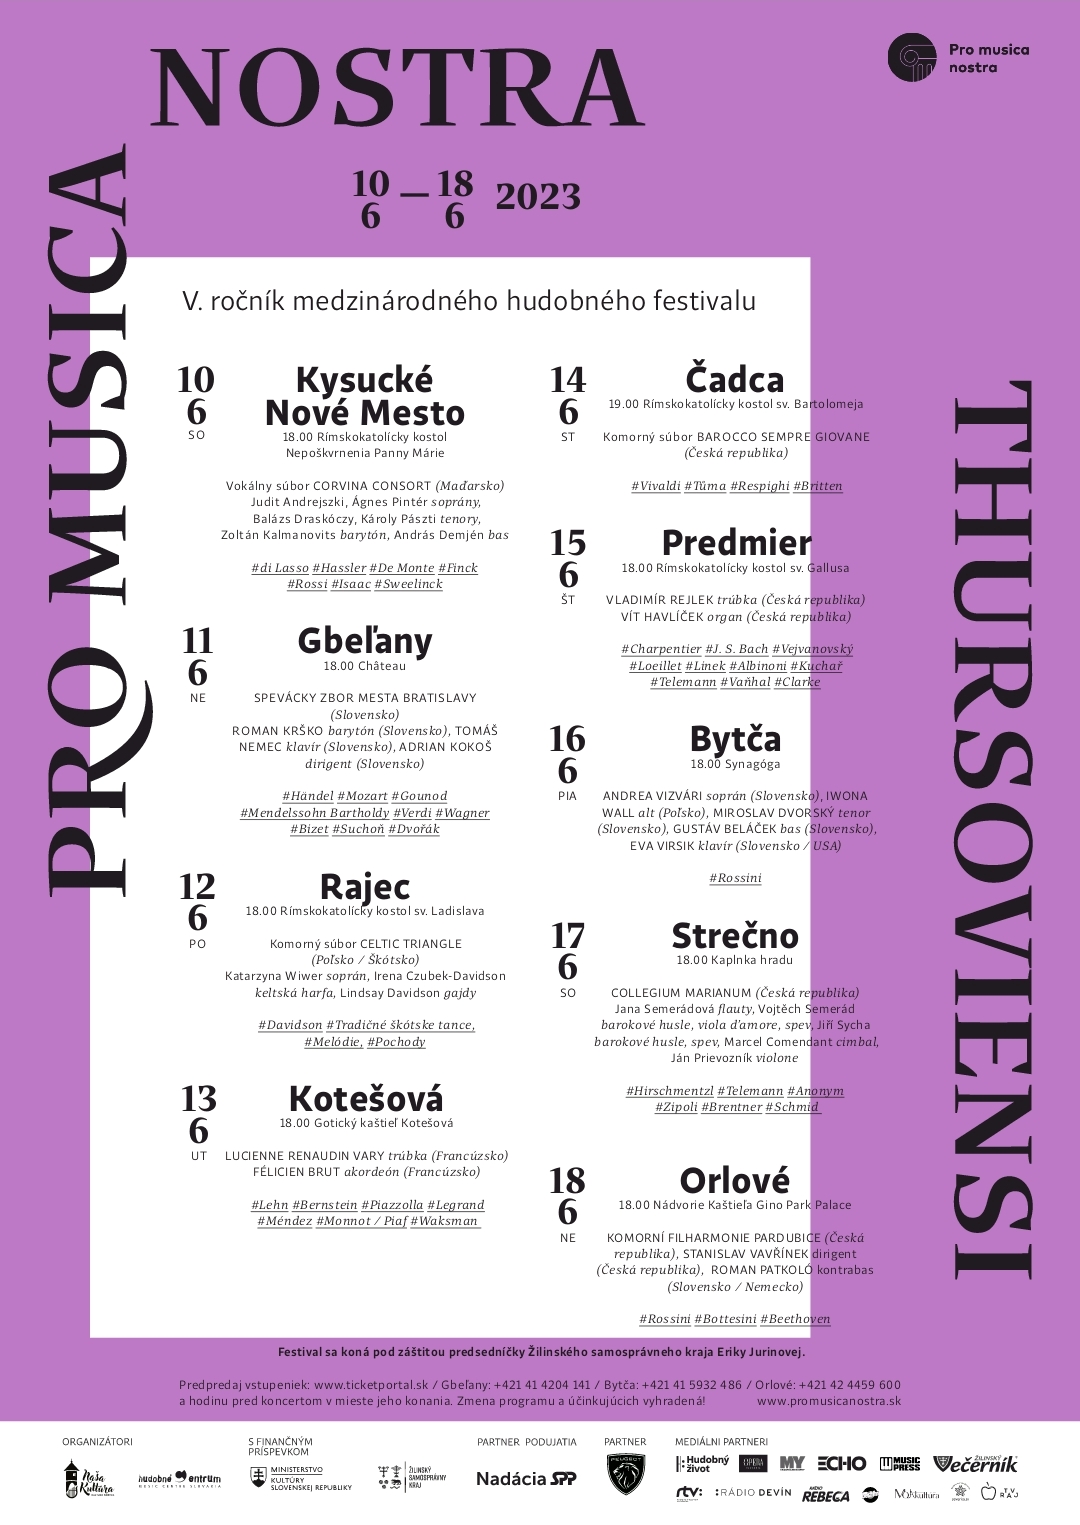 Pro Musica Nostra Thursoviensi 2023                  Château Gbeľany                11.06.2023